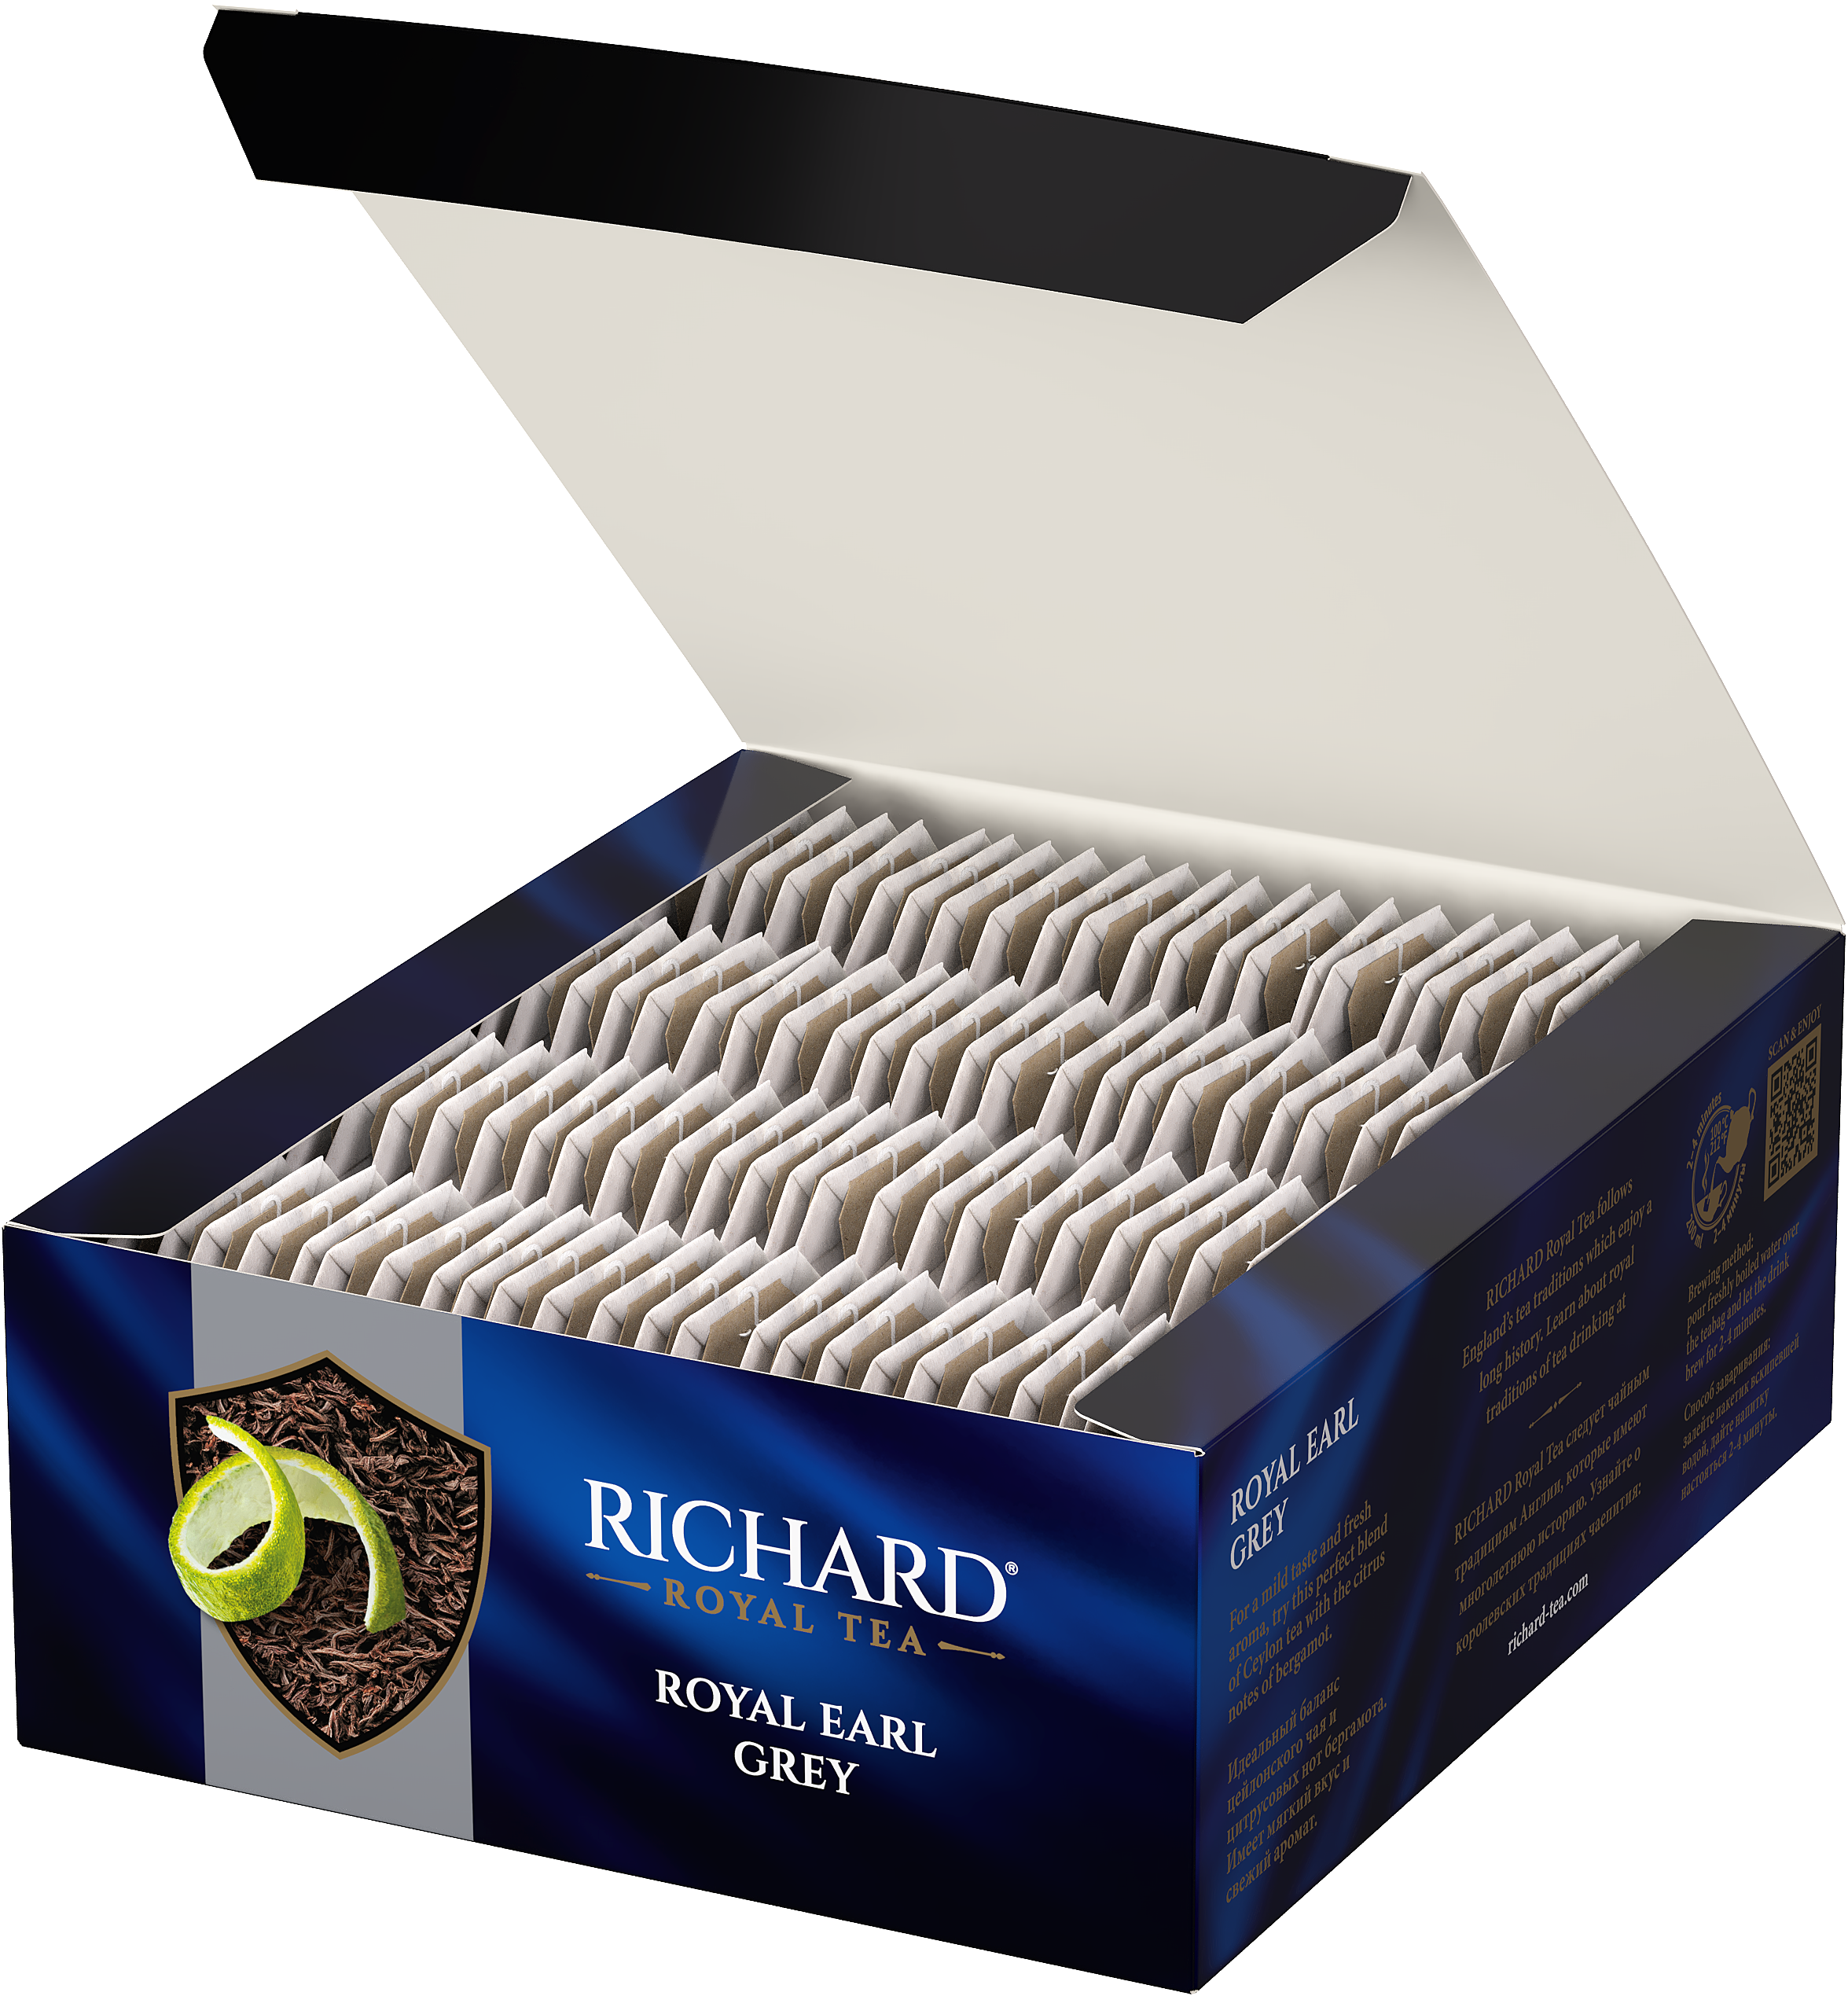 Richard "Royal Earl Grey" black tea flavored 100 sachets, 200g